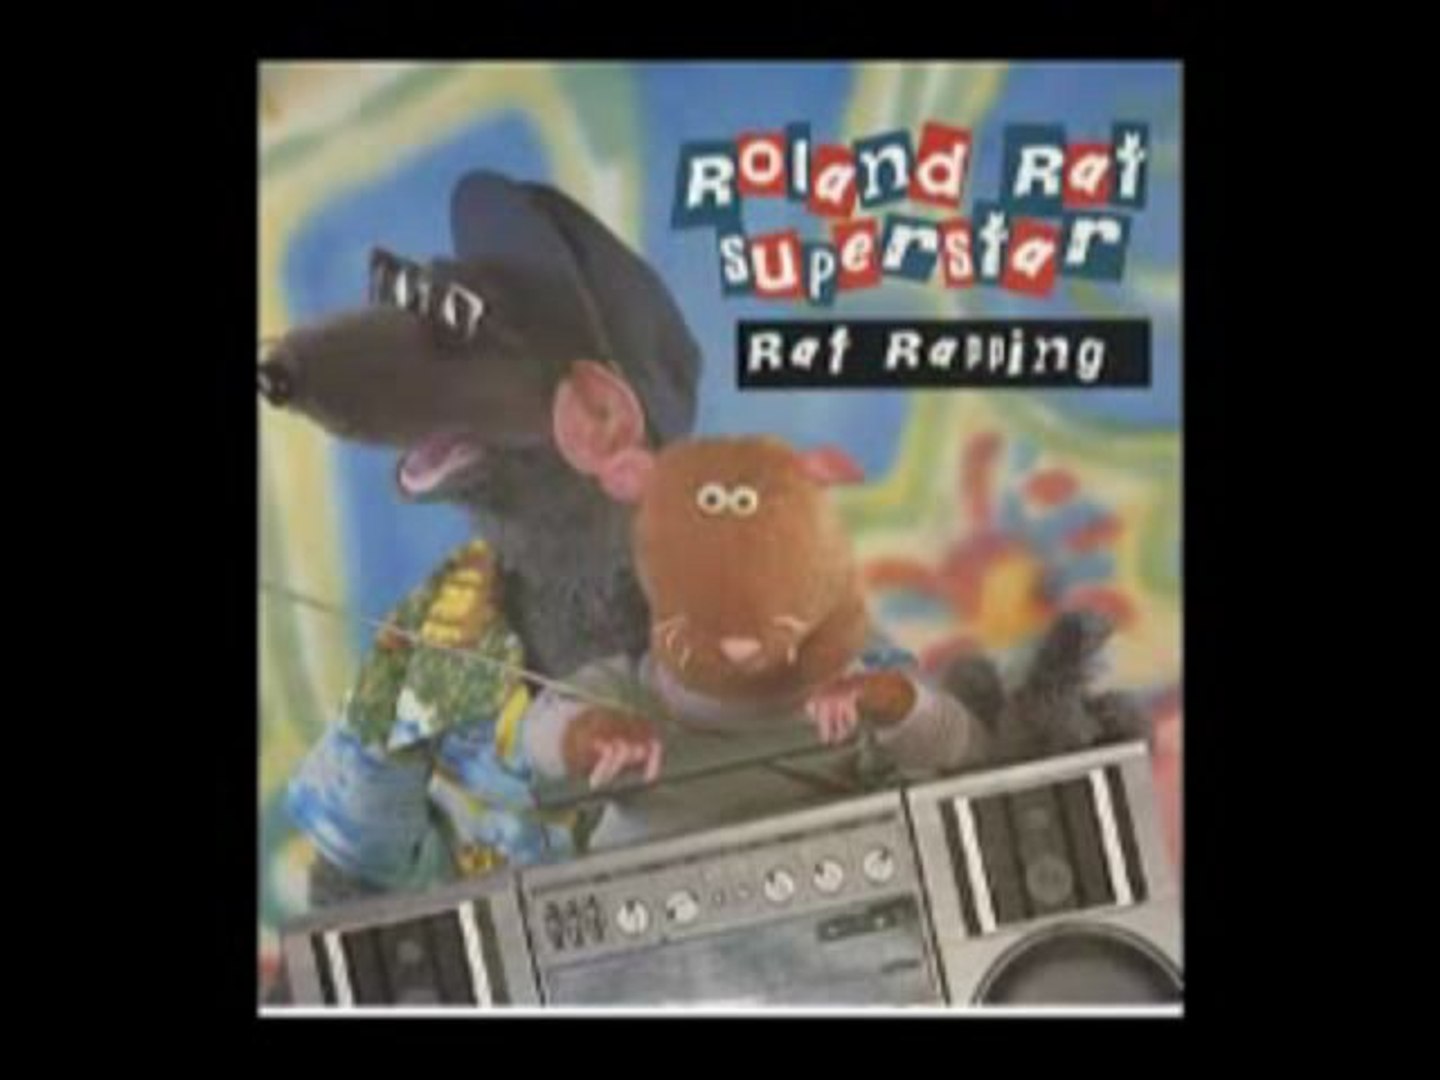 Roland Rat Superstar - Rat Rapping